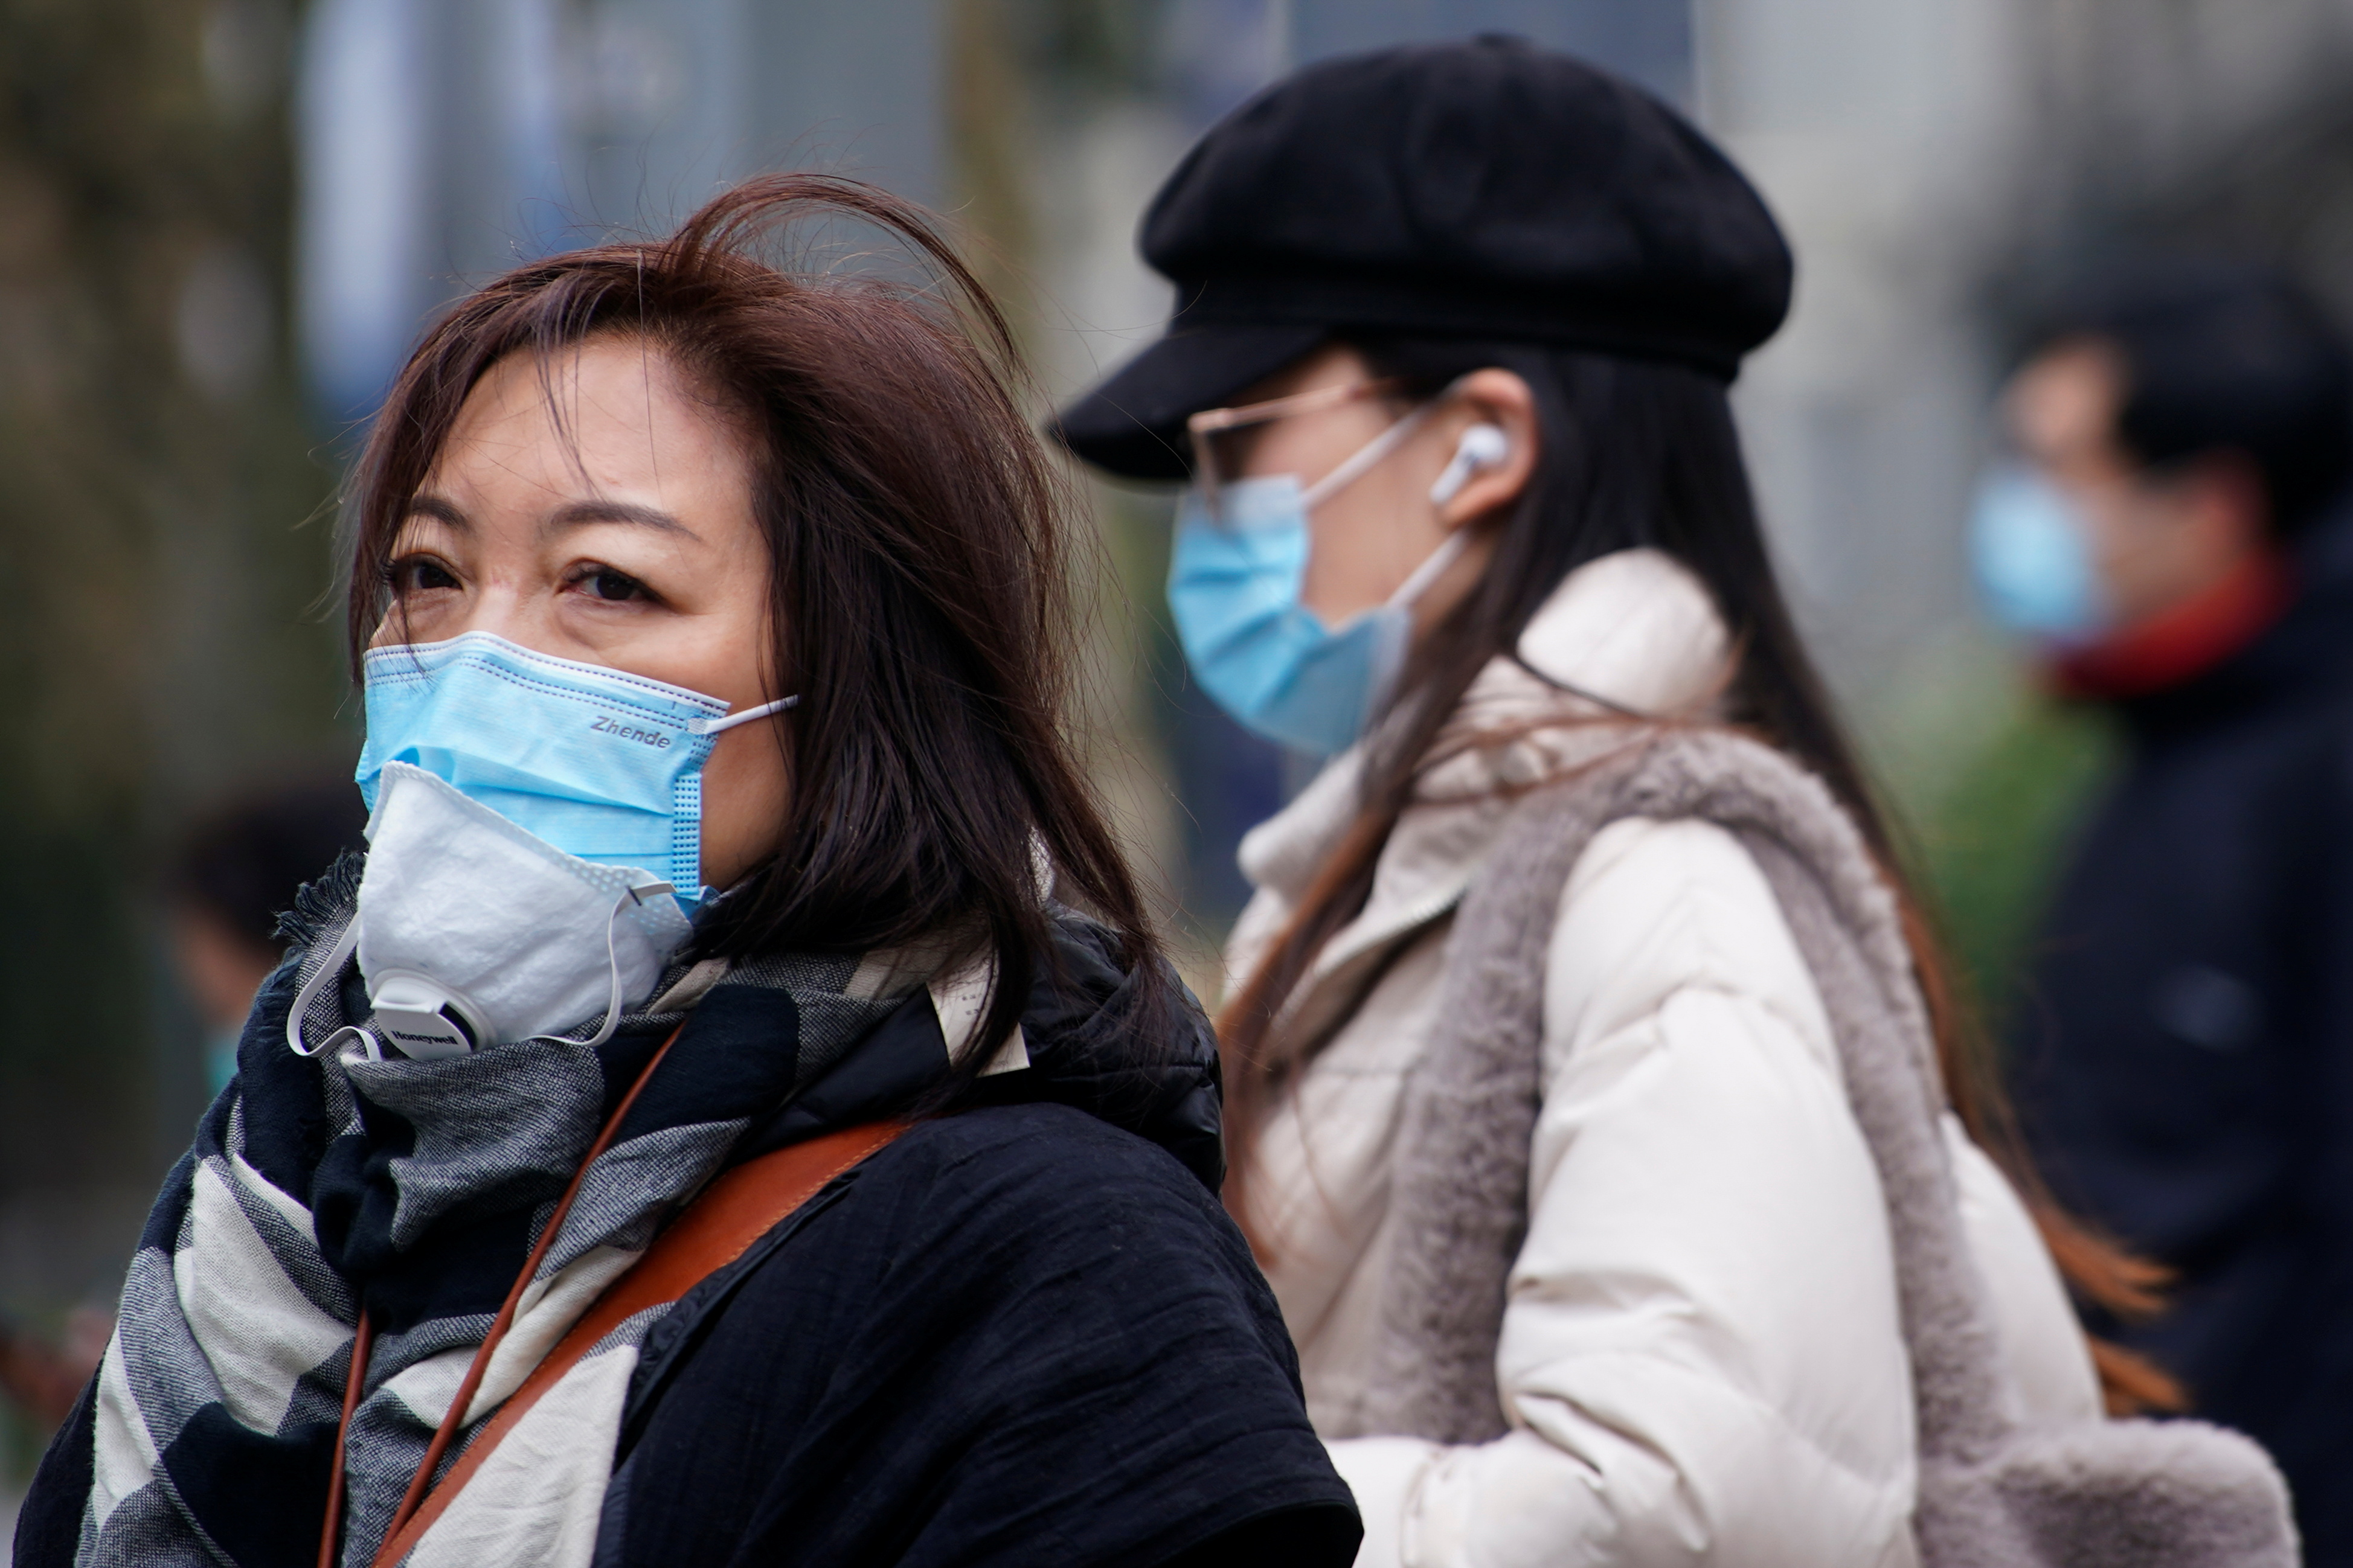 People wearing face masks are seen on a street following the coronavirus disease (COVID-19) outbreak, in Shanghai